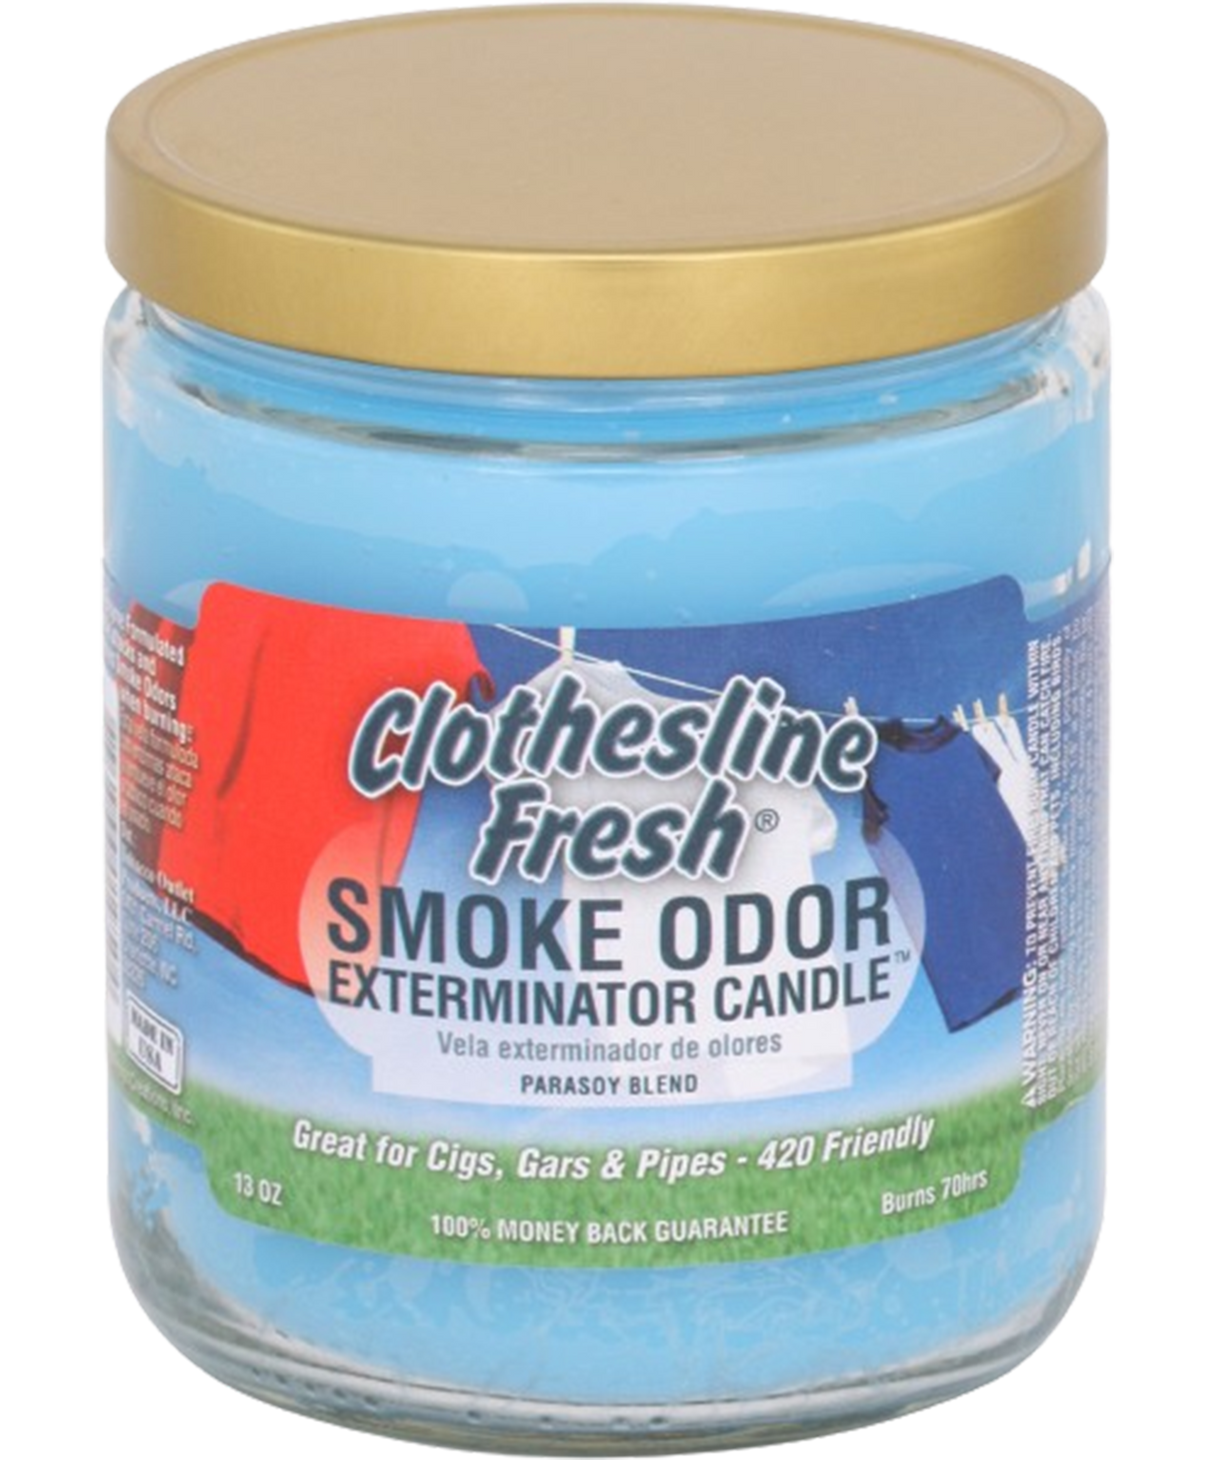 Smoke Odor 13 Oz. Candle: Clothesline Fresh